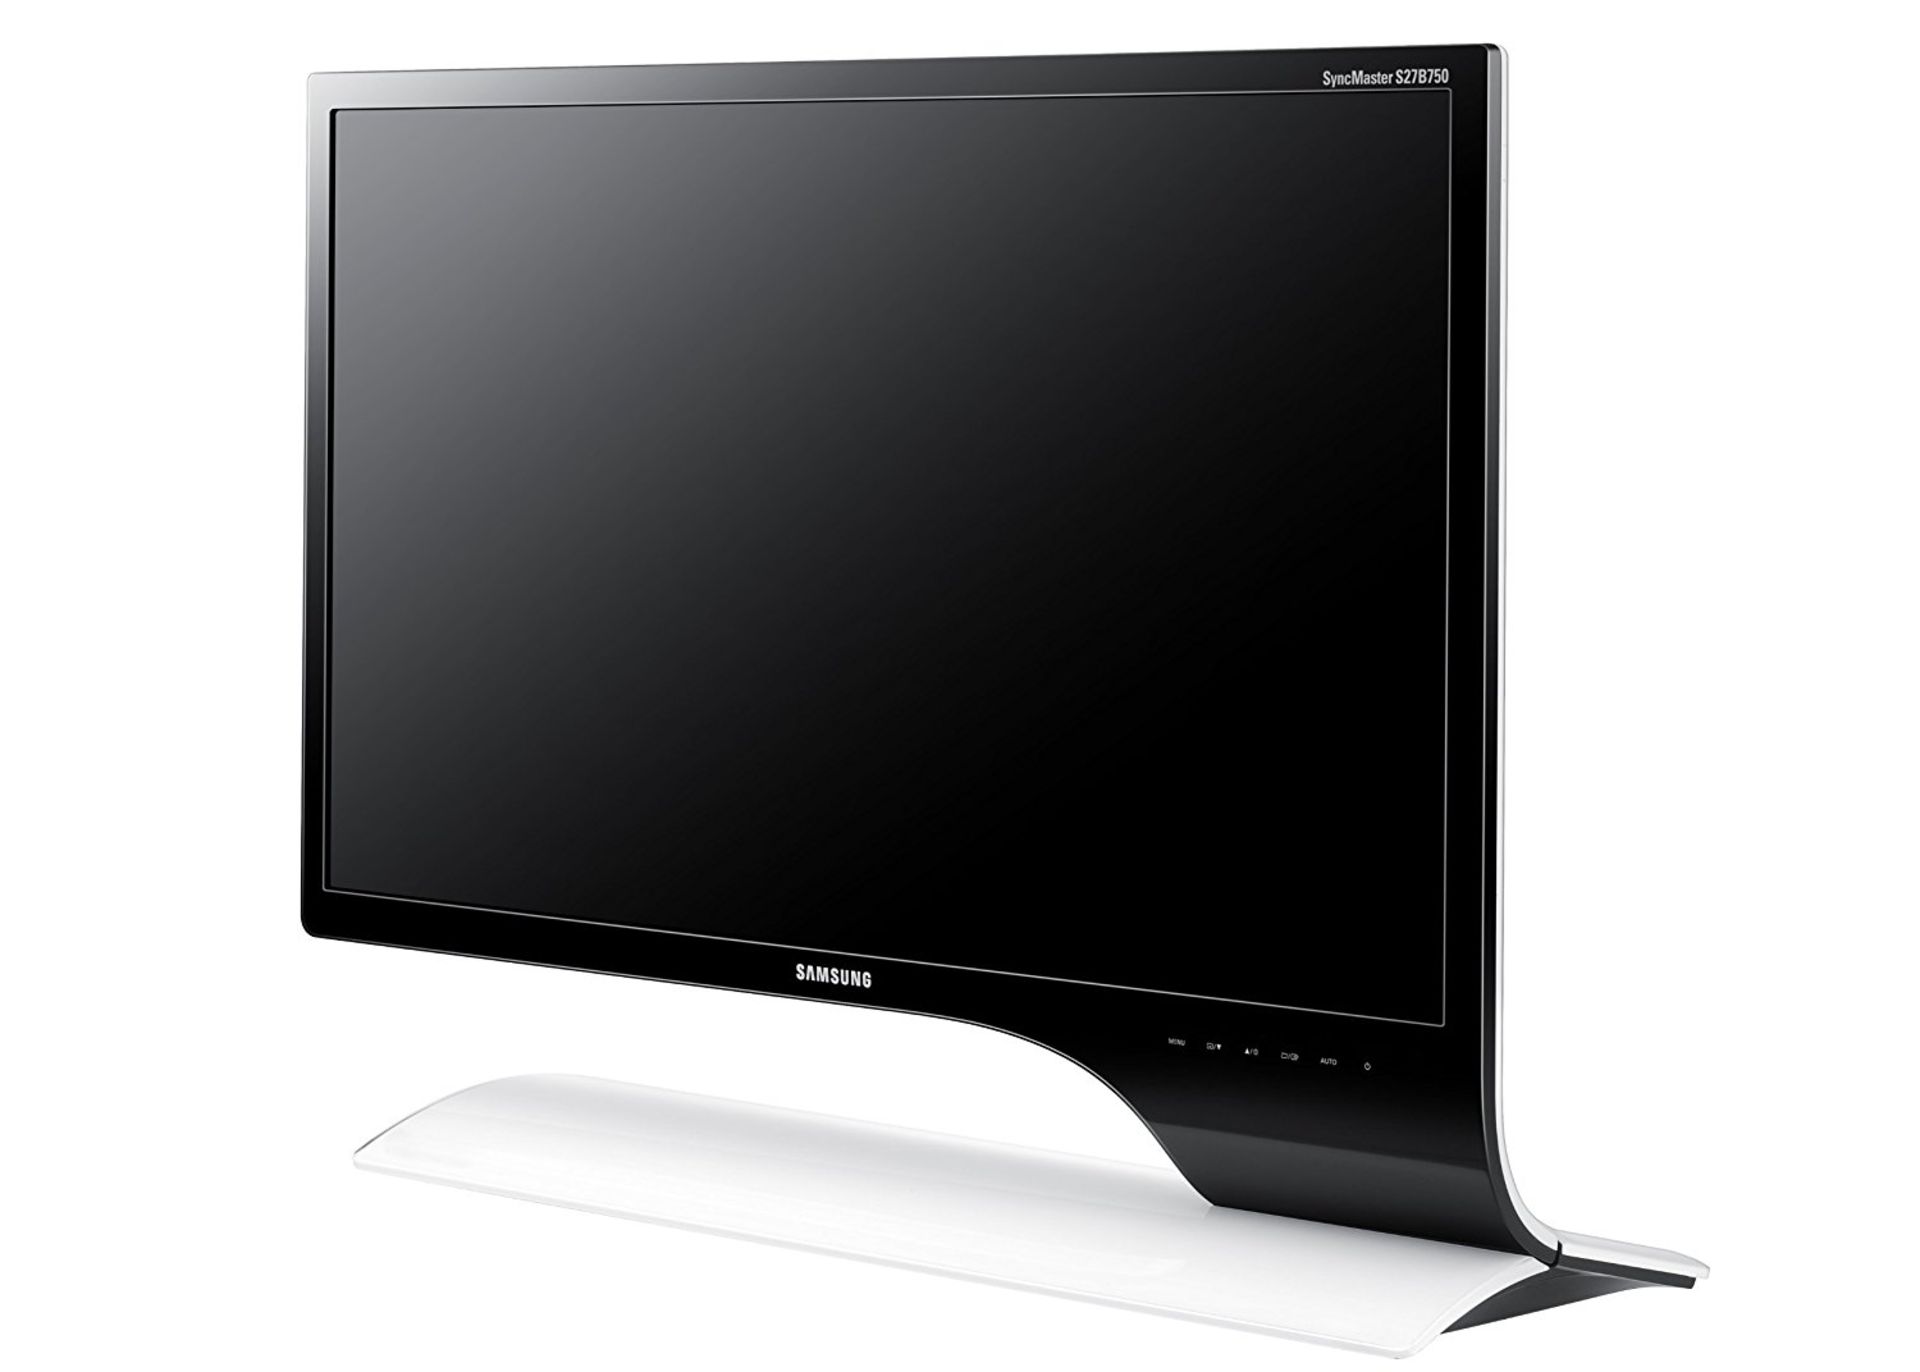 Designer Samsung Syncmaster 27in Monitor Model S27b750 - Image 4 of 4